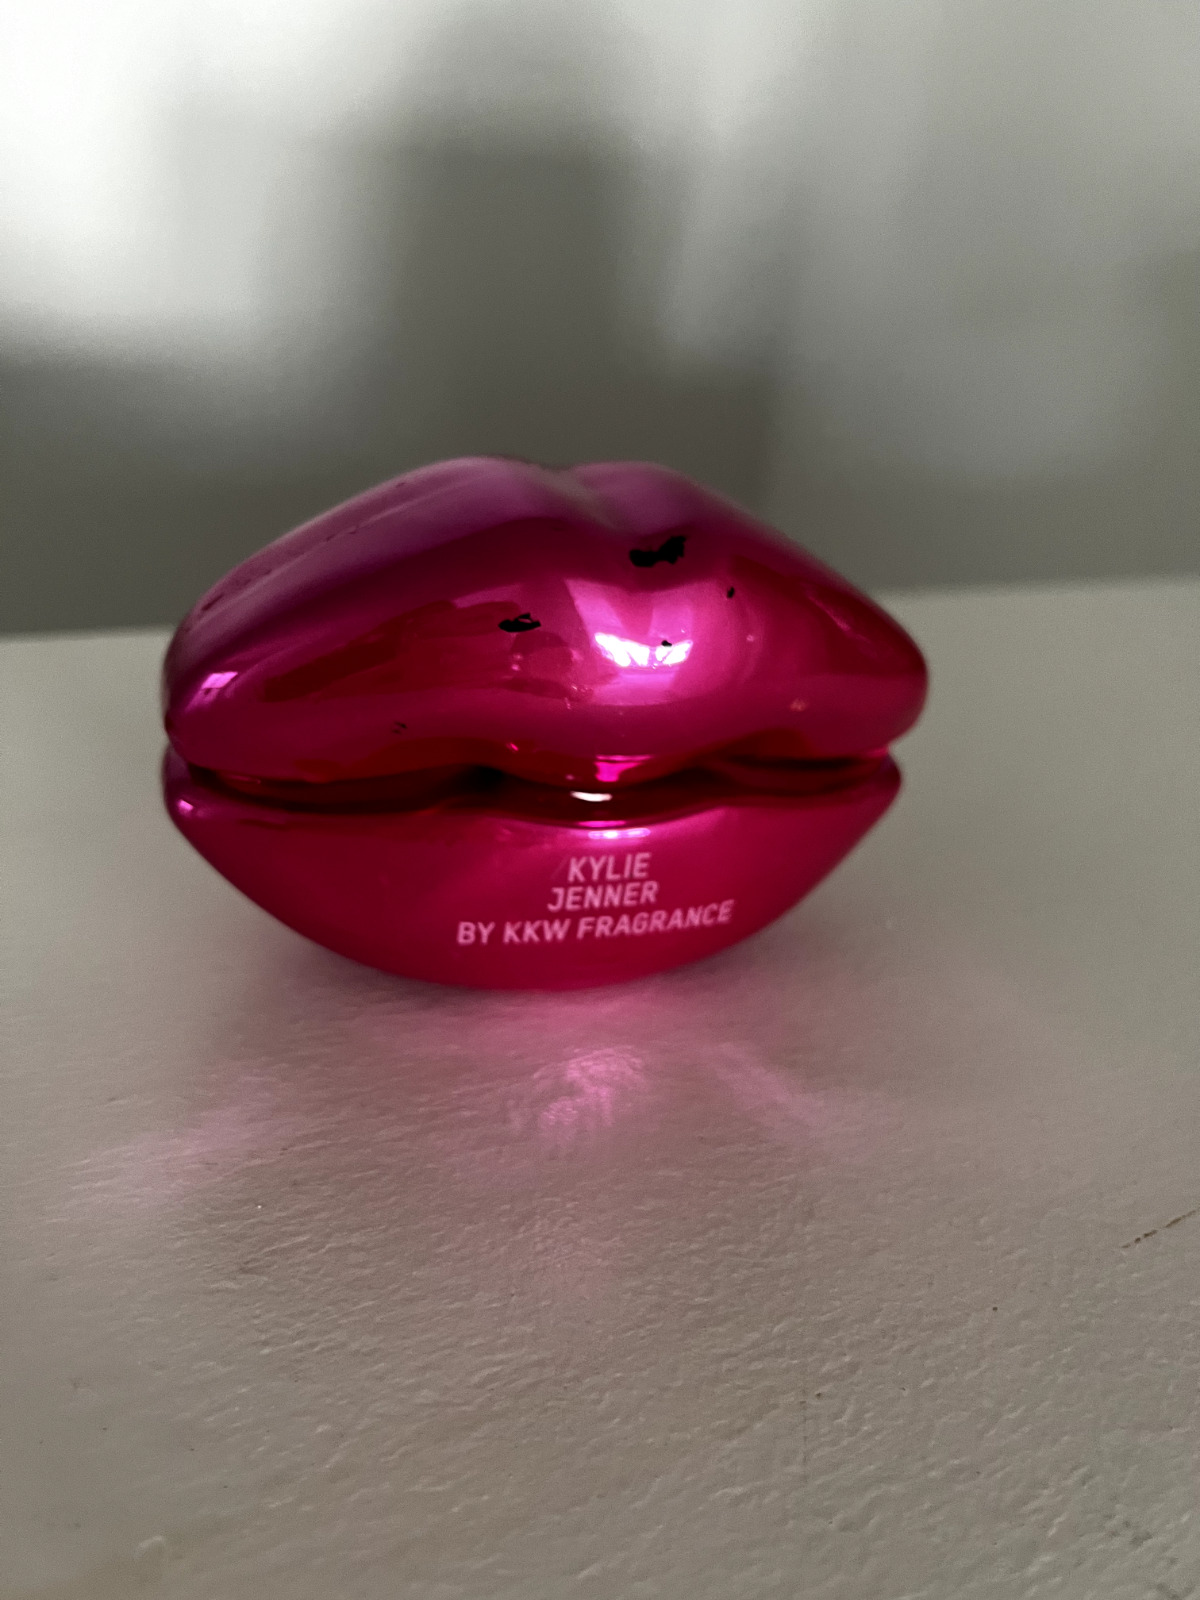 Kylie Jenner PINK LIPS Eau de Parfum Spray by KKW Fragrance 1 oz 95%